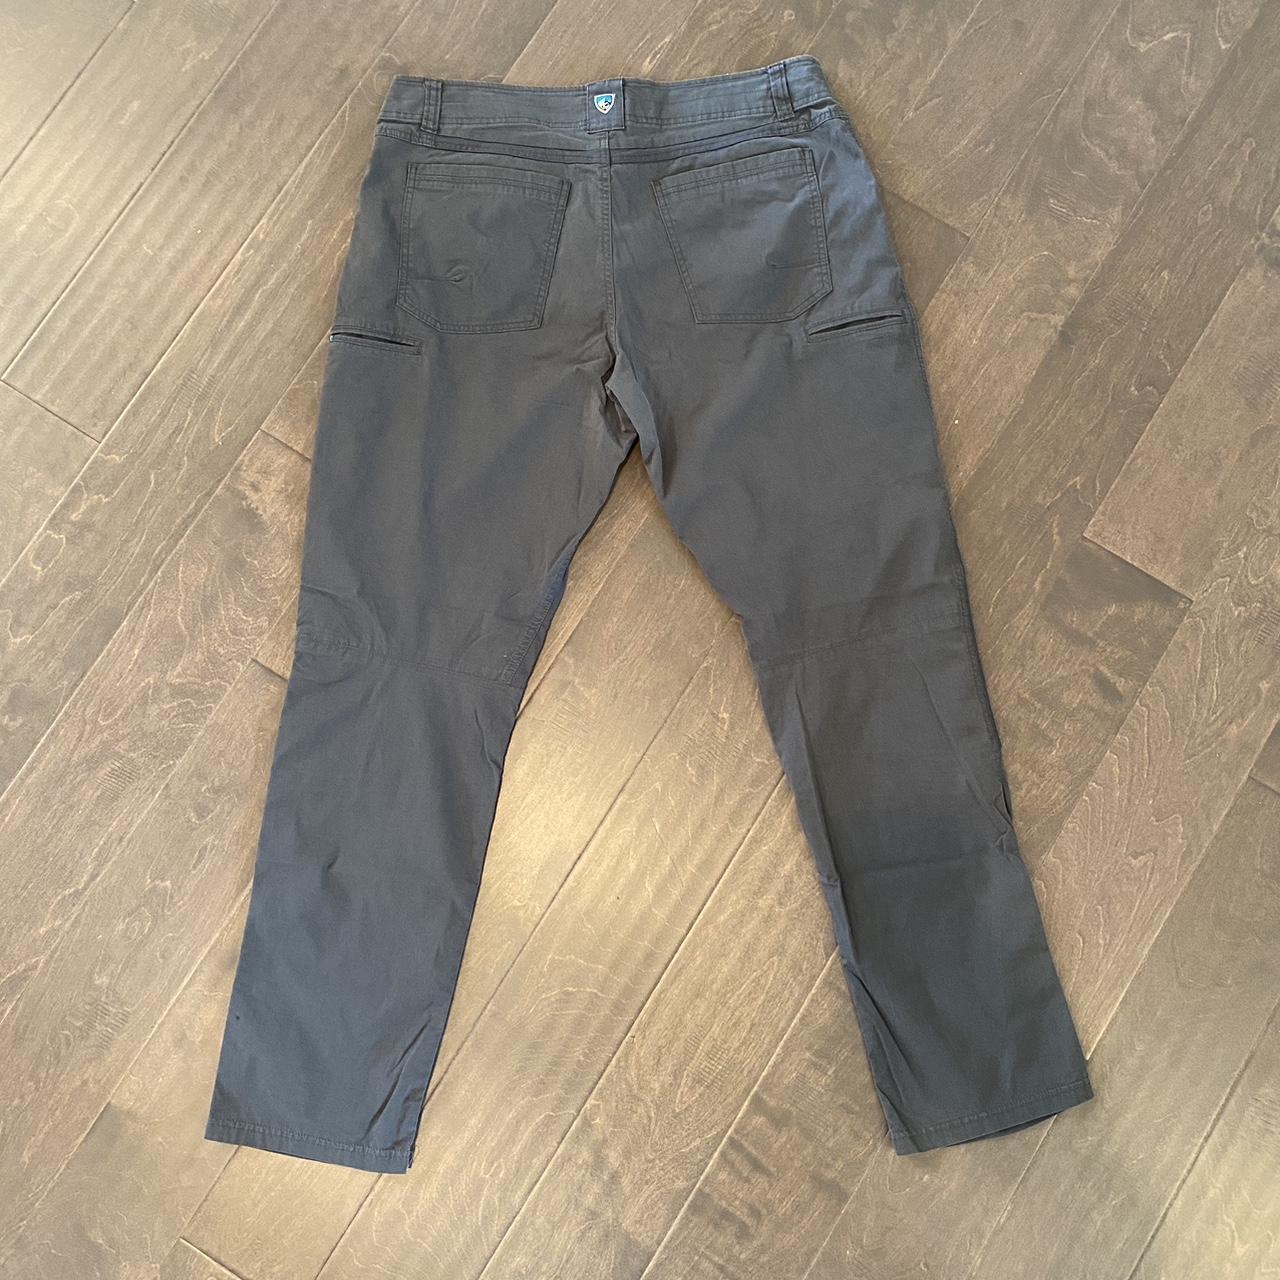 Grey Kühl Cargo Work Pants size 36 x 32 #Kühl #Cargo - Depop